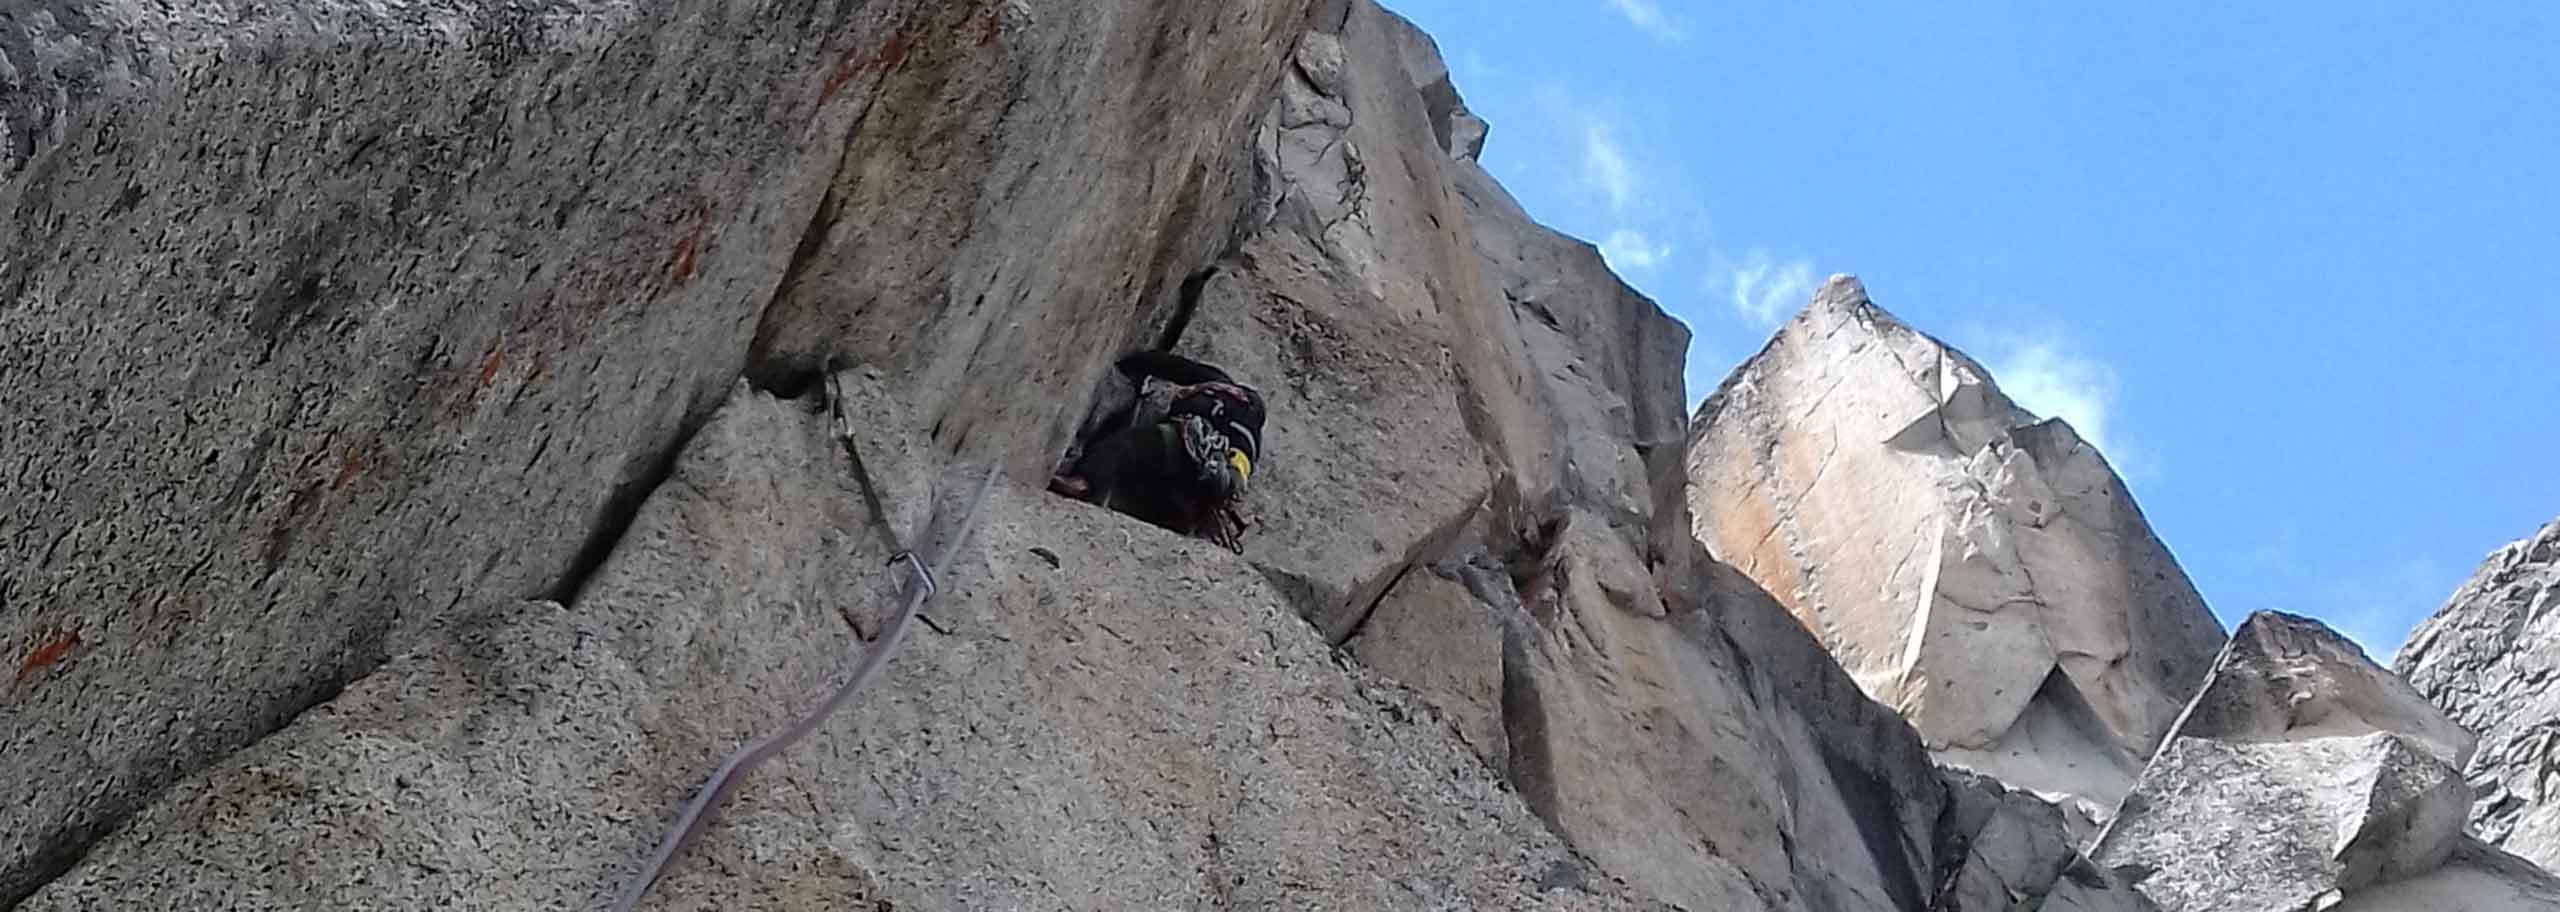 Rock Climbing in Valchiavenna, Trad and Sport Climbing